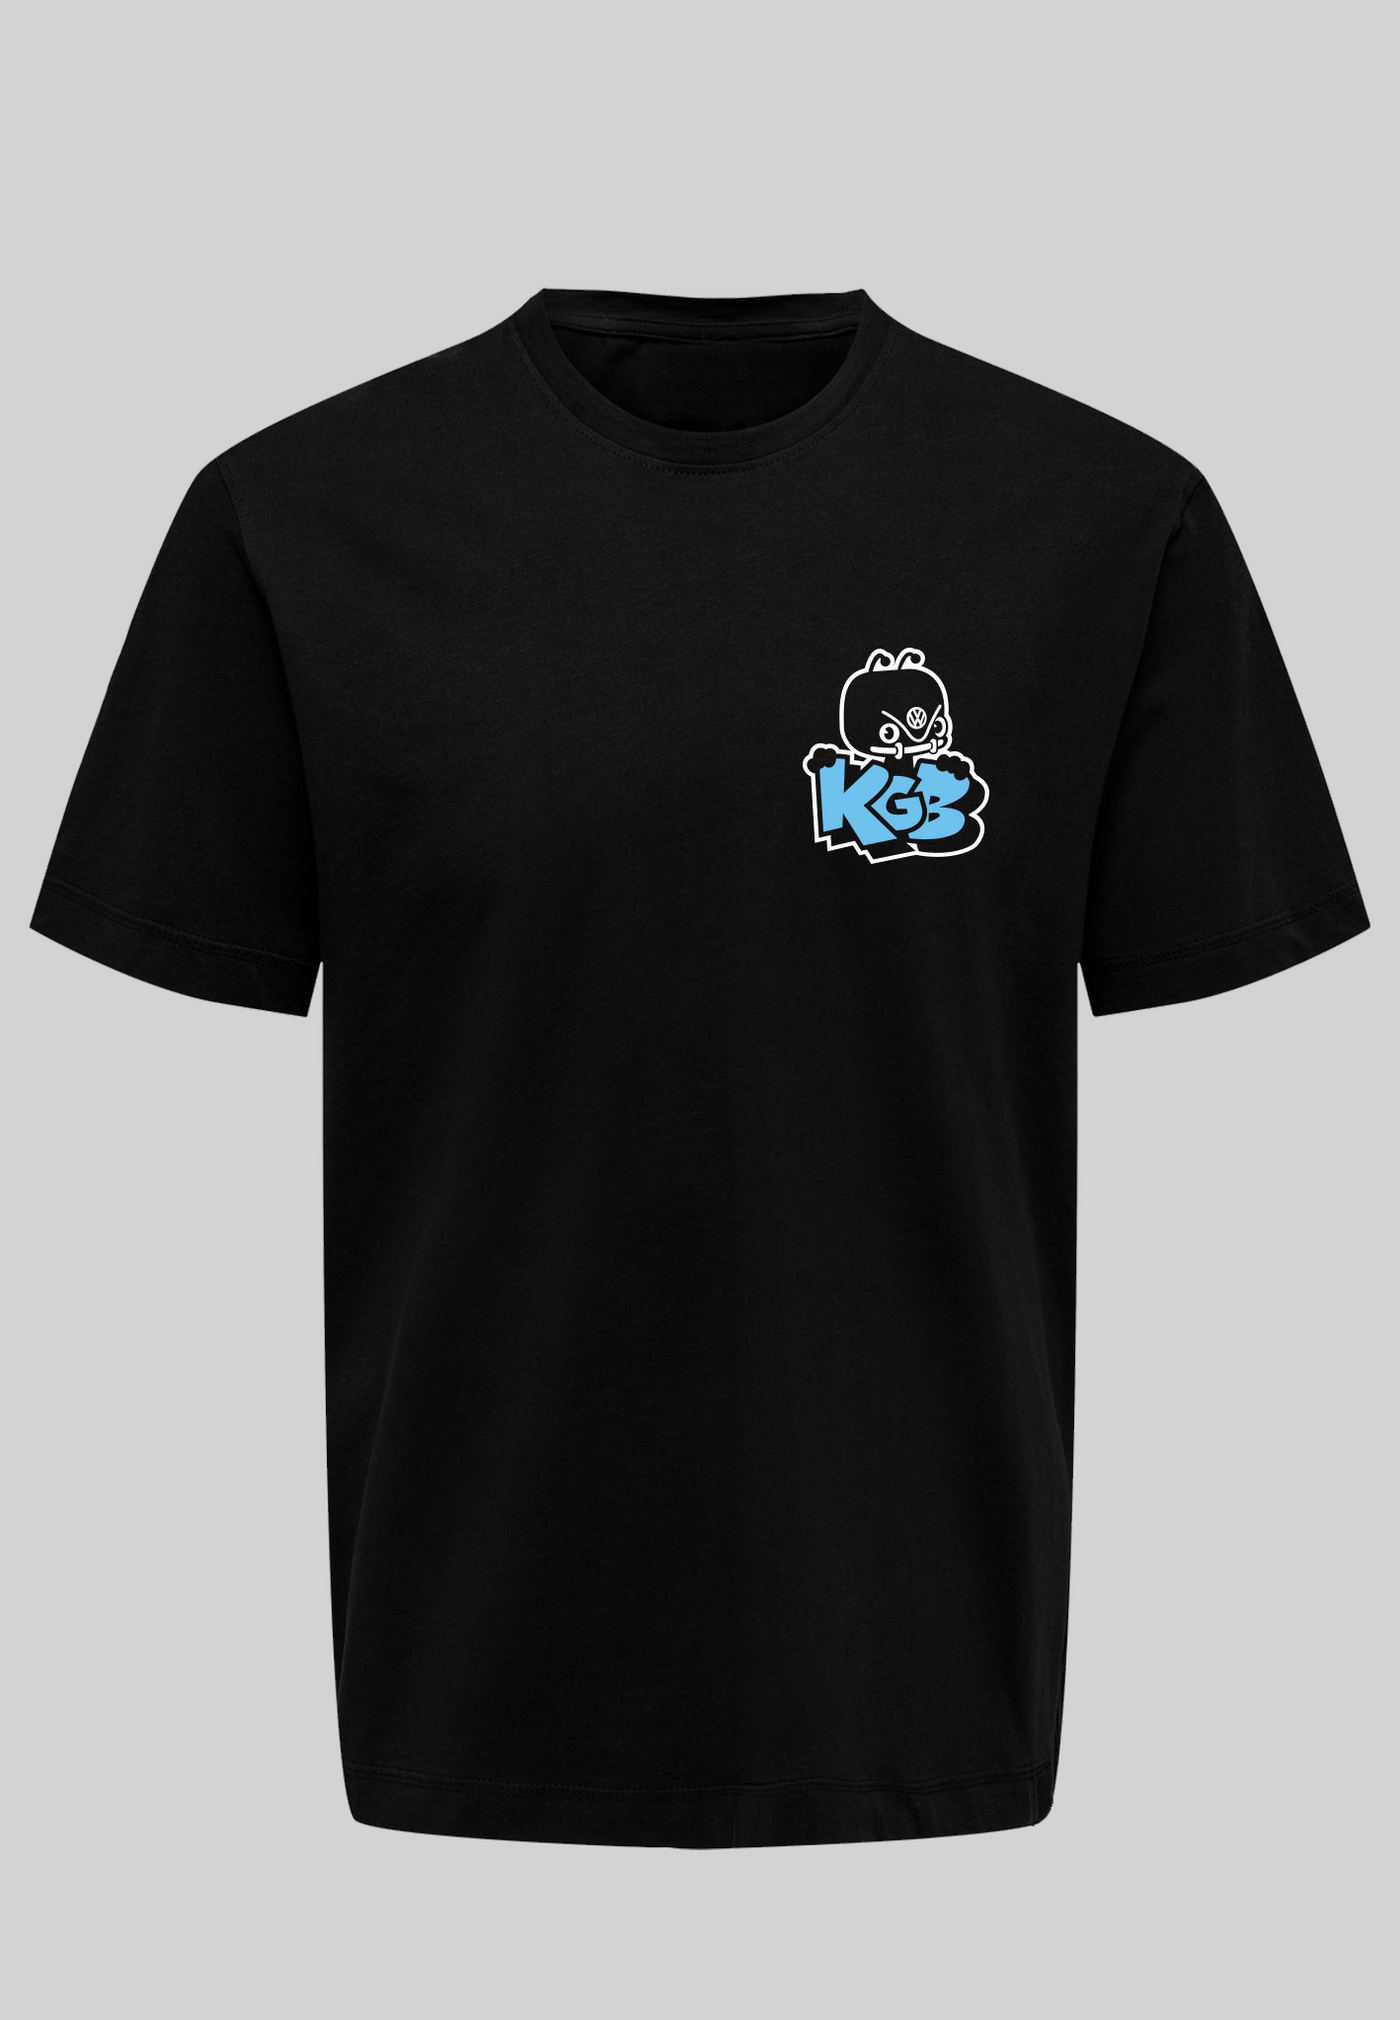 KGB T-shirt - blå logo (uden ryg logo)